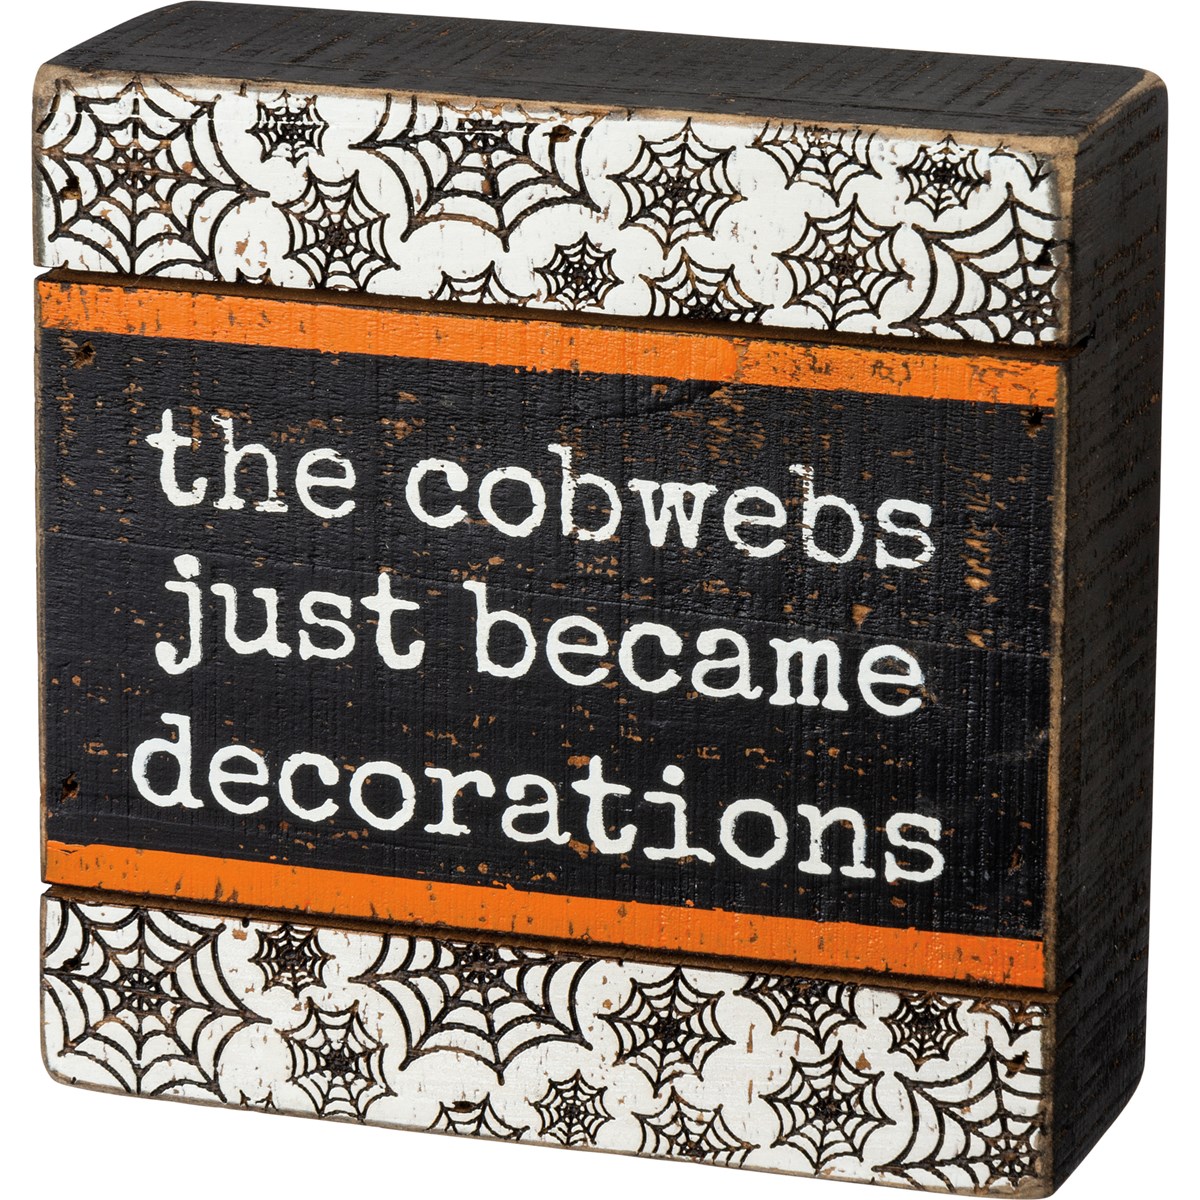 Cobwebs Became Decorations Box Sign - Wood